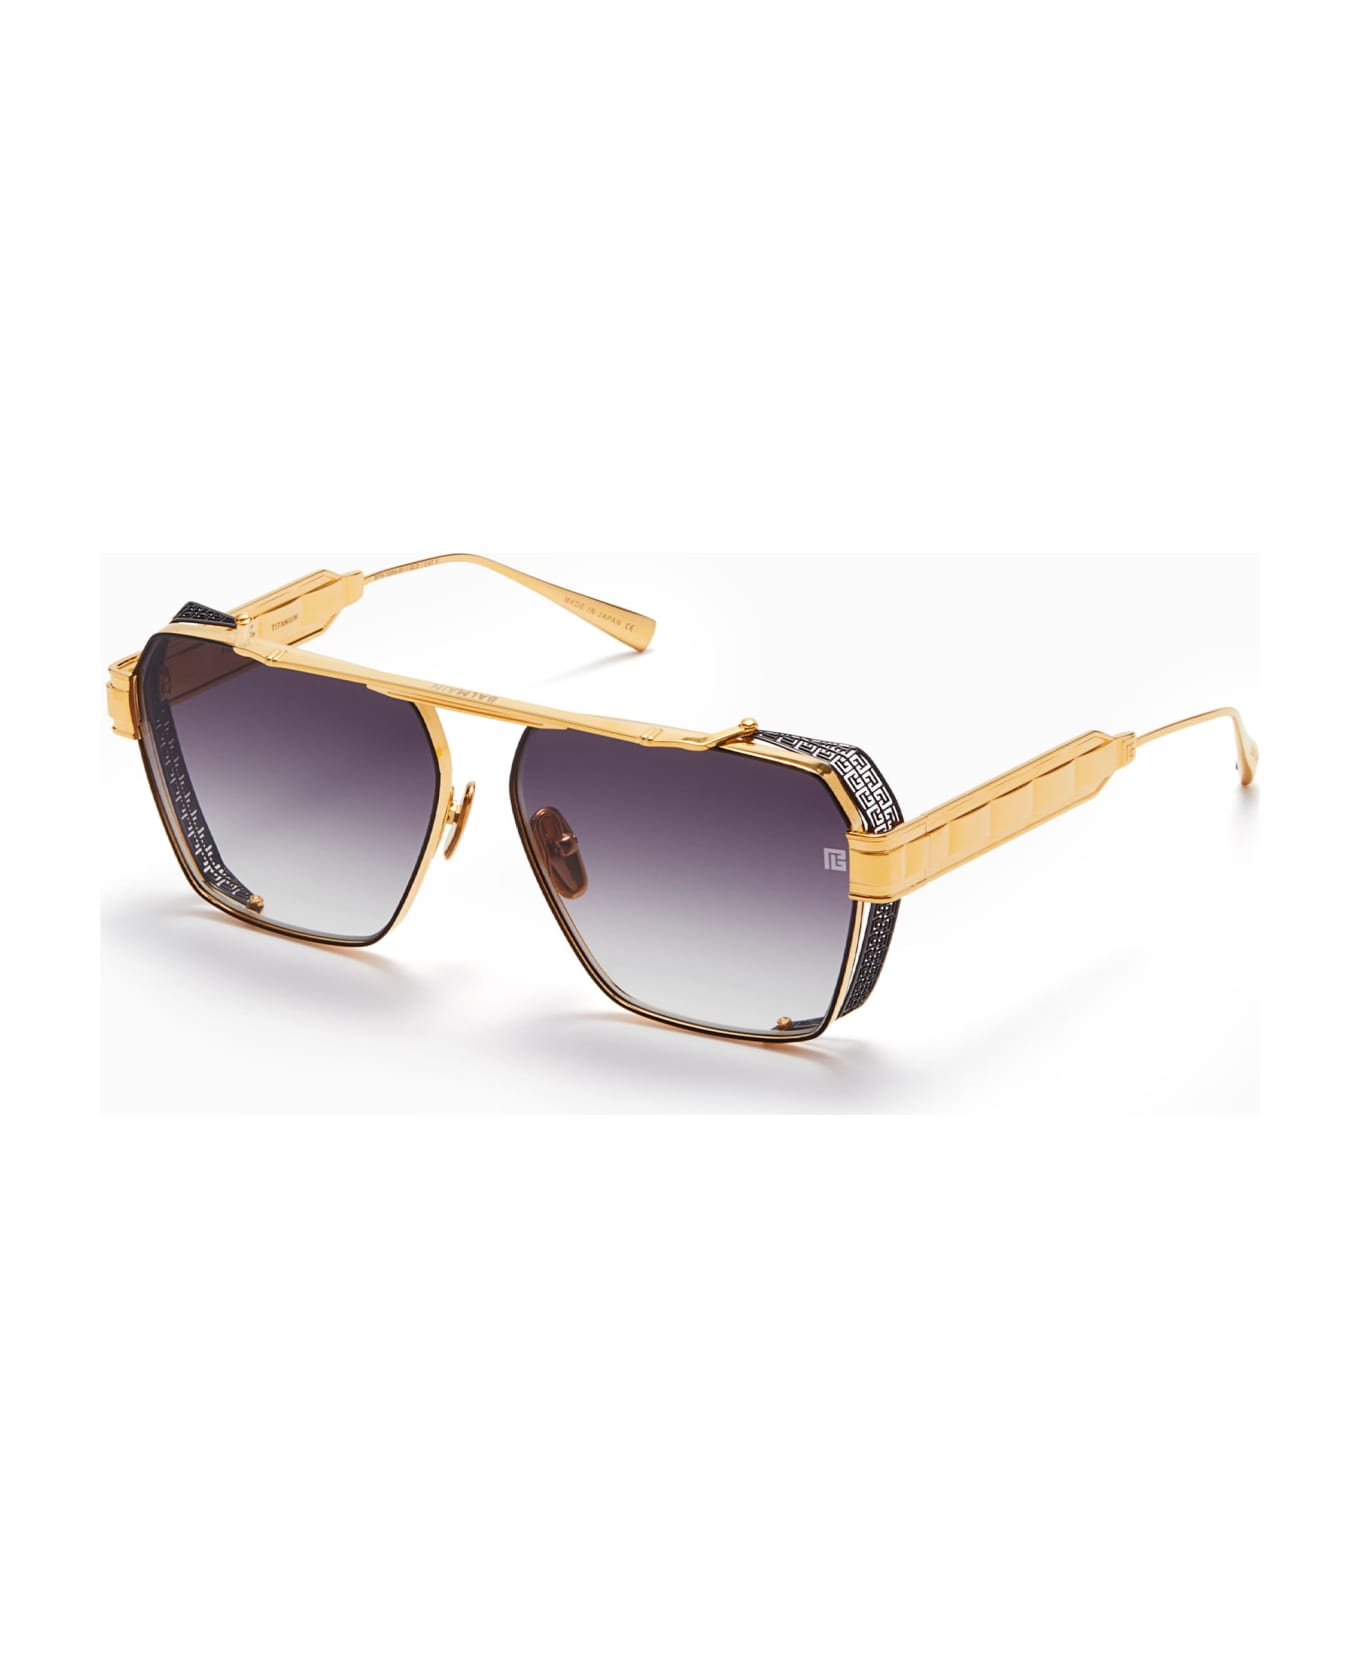 Balmain Premier - Gold Sunglasses - Gold